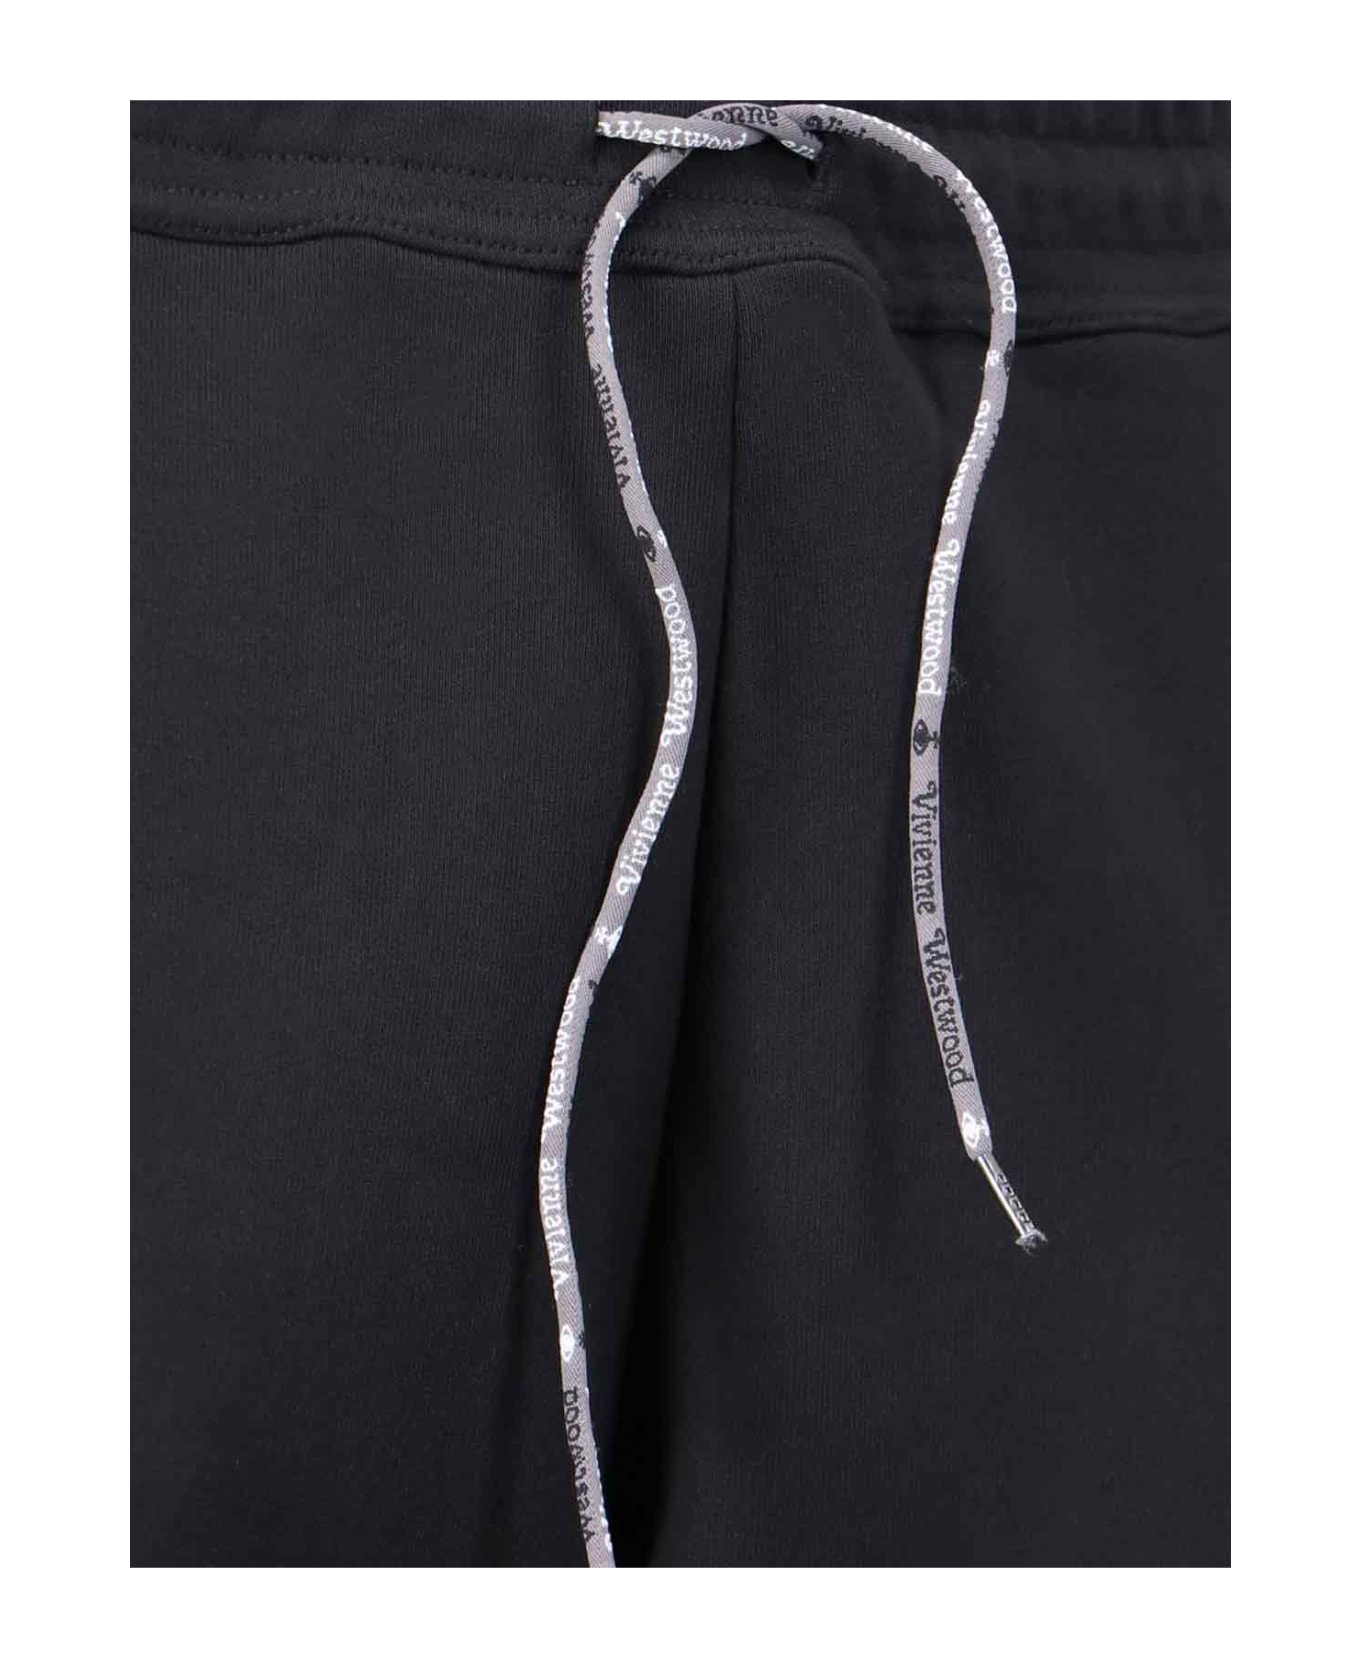 Vivienne Westwood Logo Track Pants - Black   スウェットパンツ